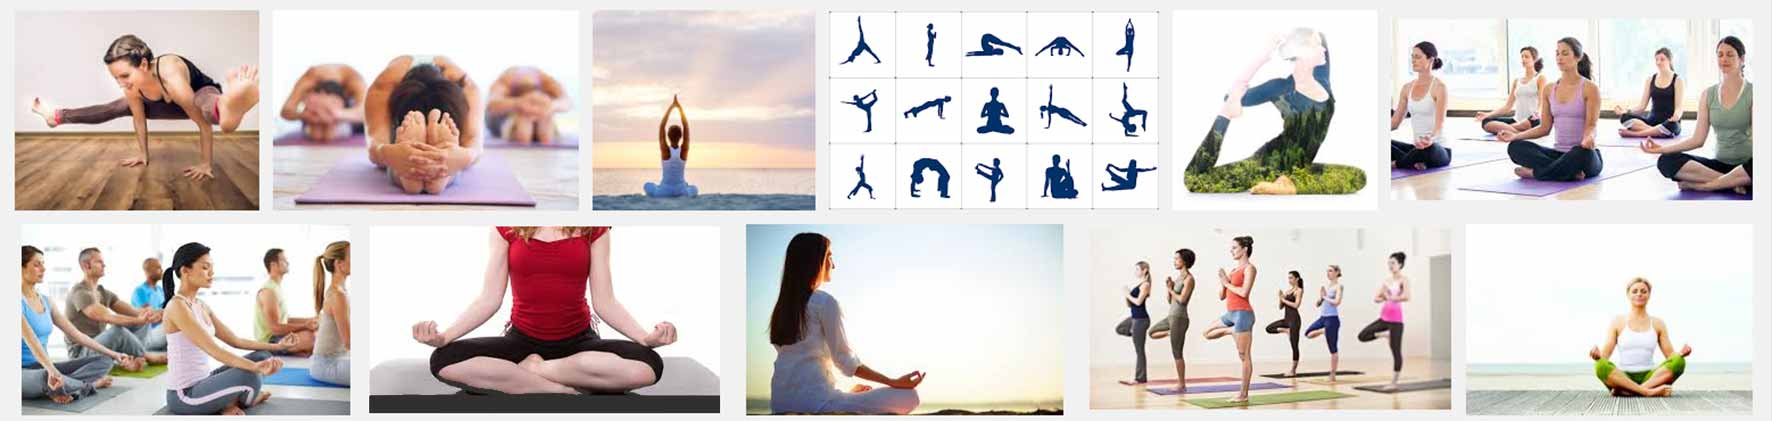 yoga images via Google Images